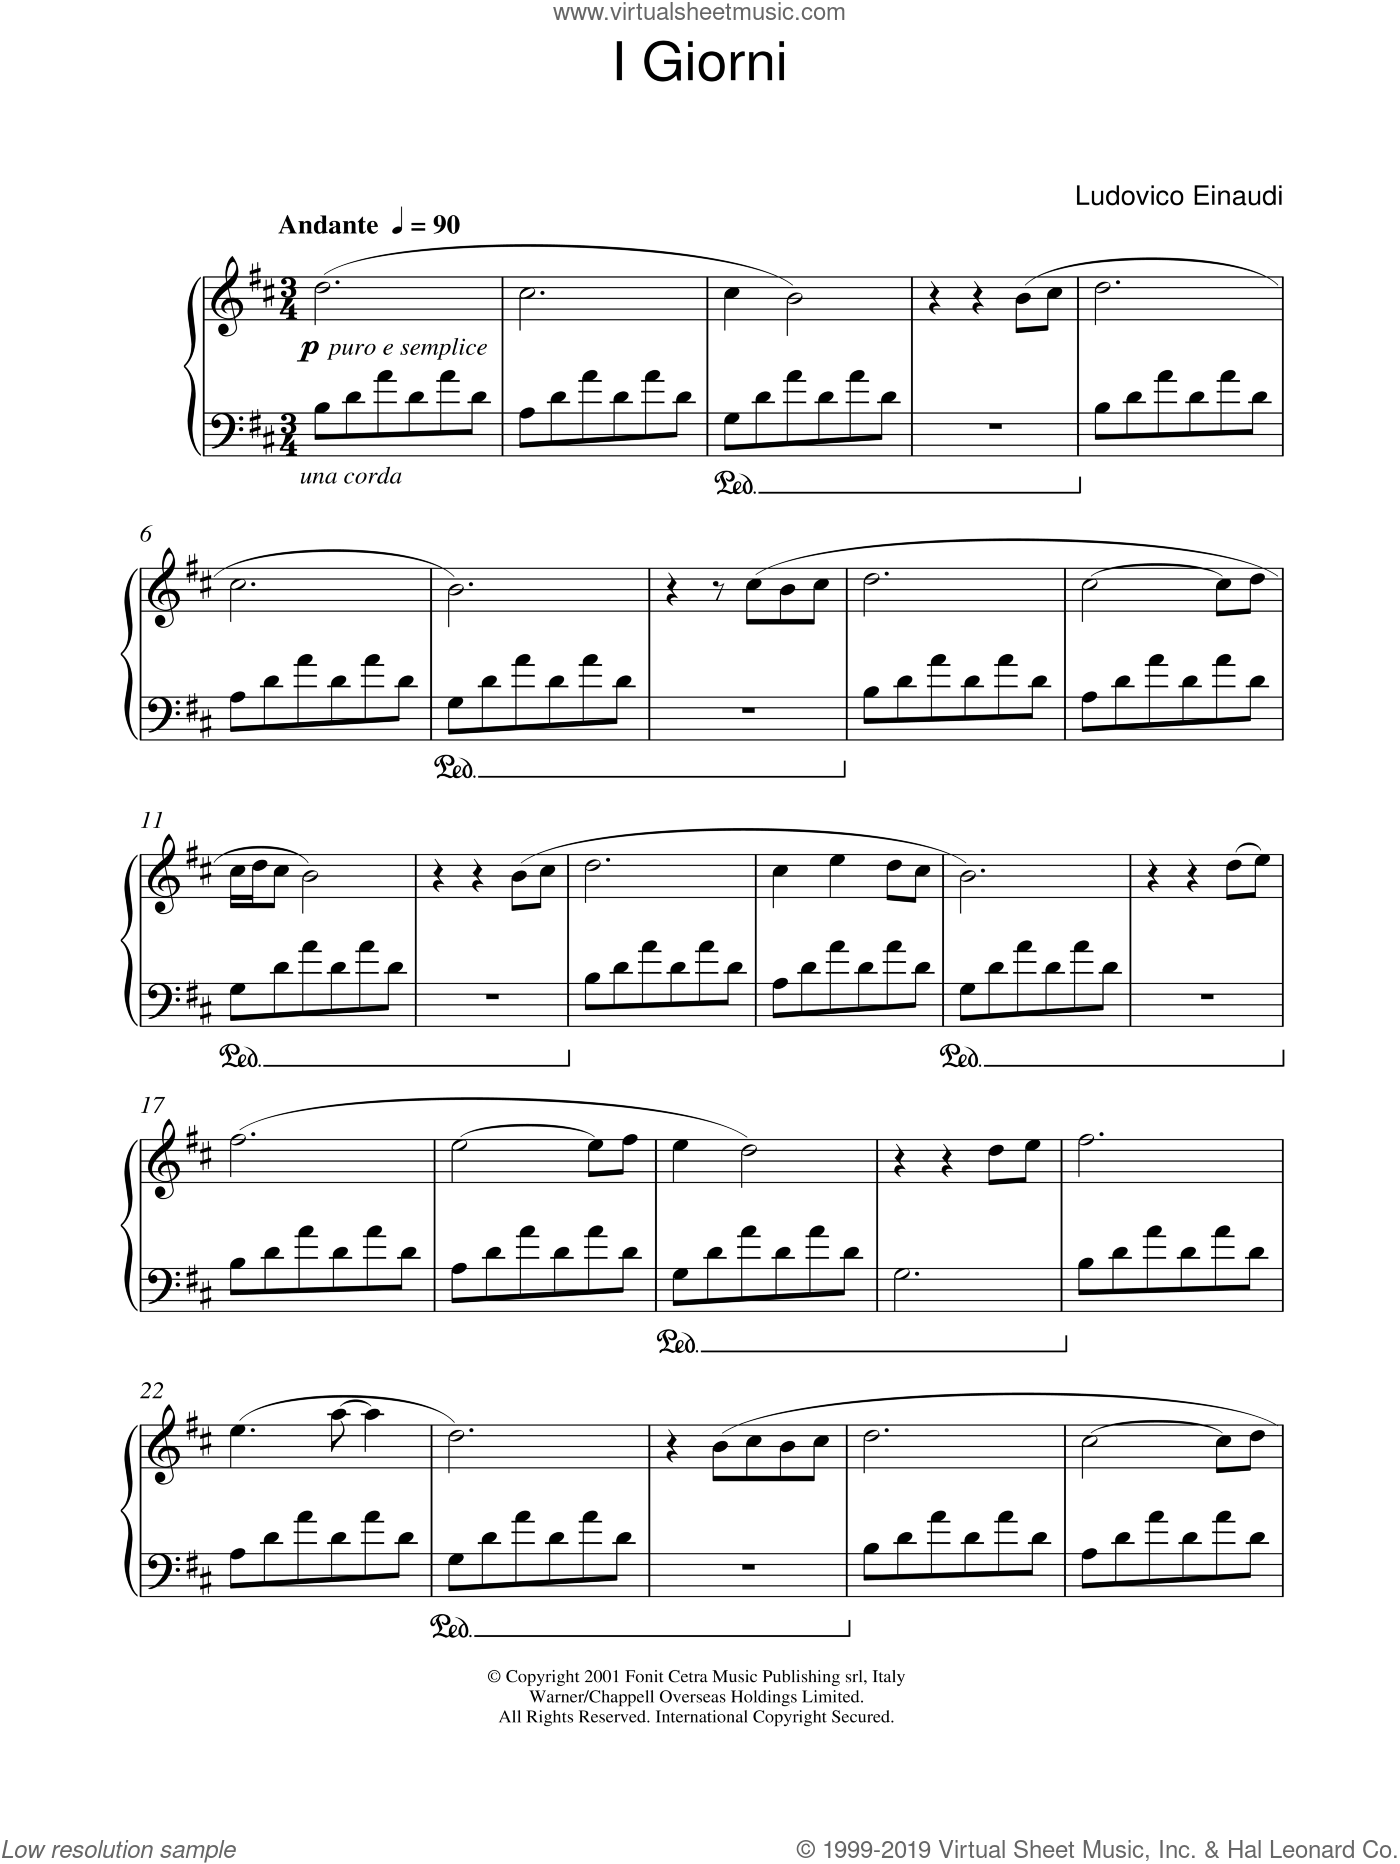 experience ludovico einaudi sheet music